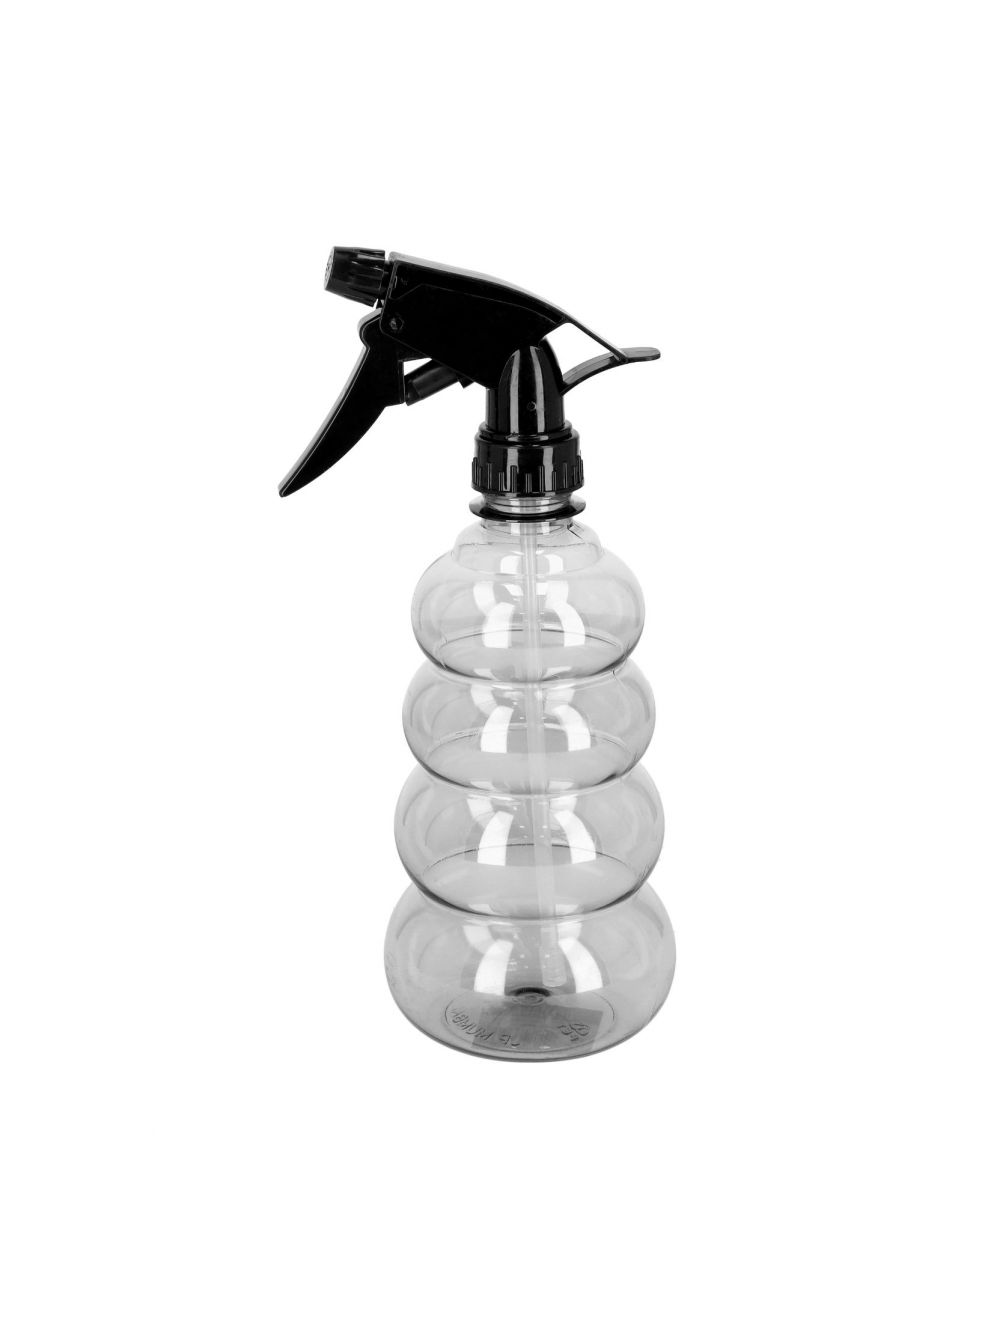 Delcasa 500ml Spray Bottle - Portable Bottle Water Mist Stream Liquid Container Leak Proof Trigger Sprayer | Transparent Body | Ideal for Salon, Tattooing, Hairdressing, Gardening